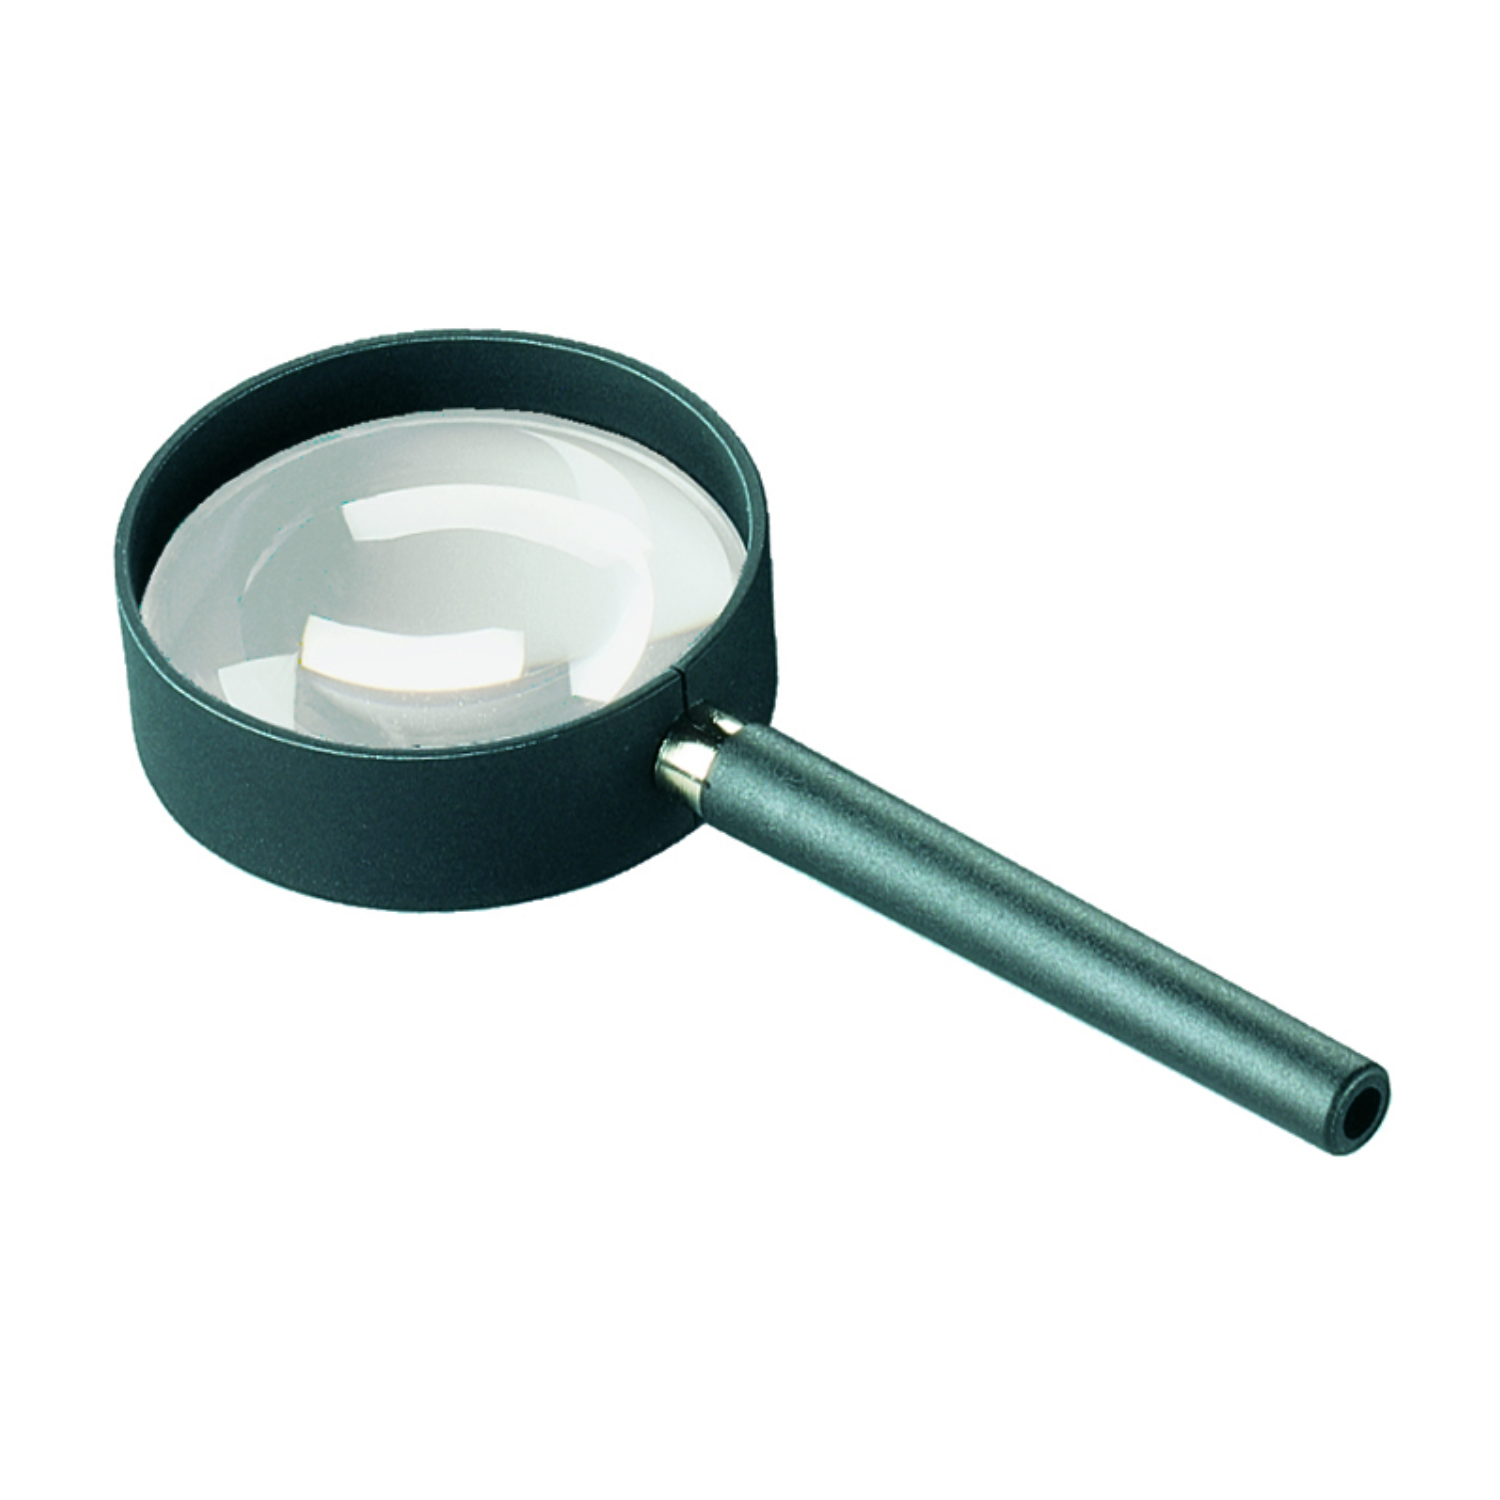 CARSON BigEye Round Hand Magnifier HU-20 - The Home Depot